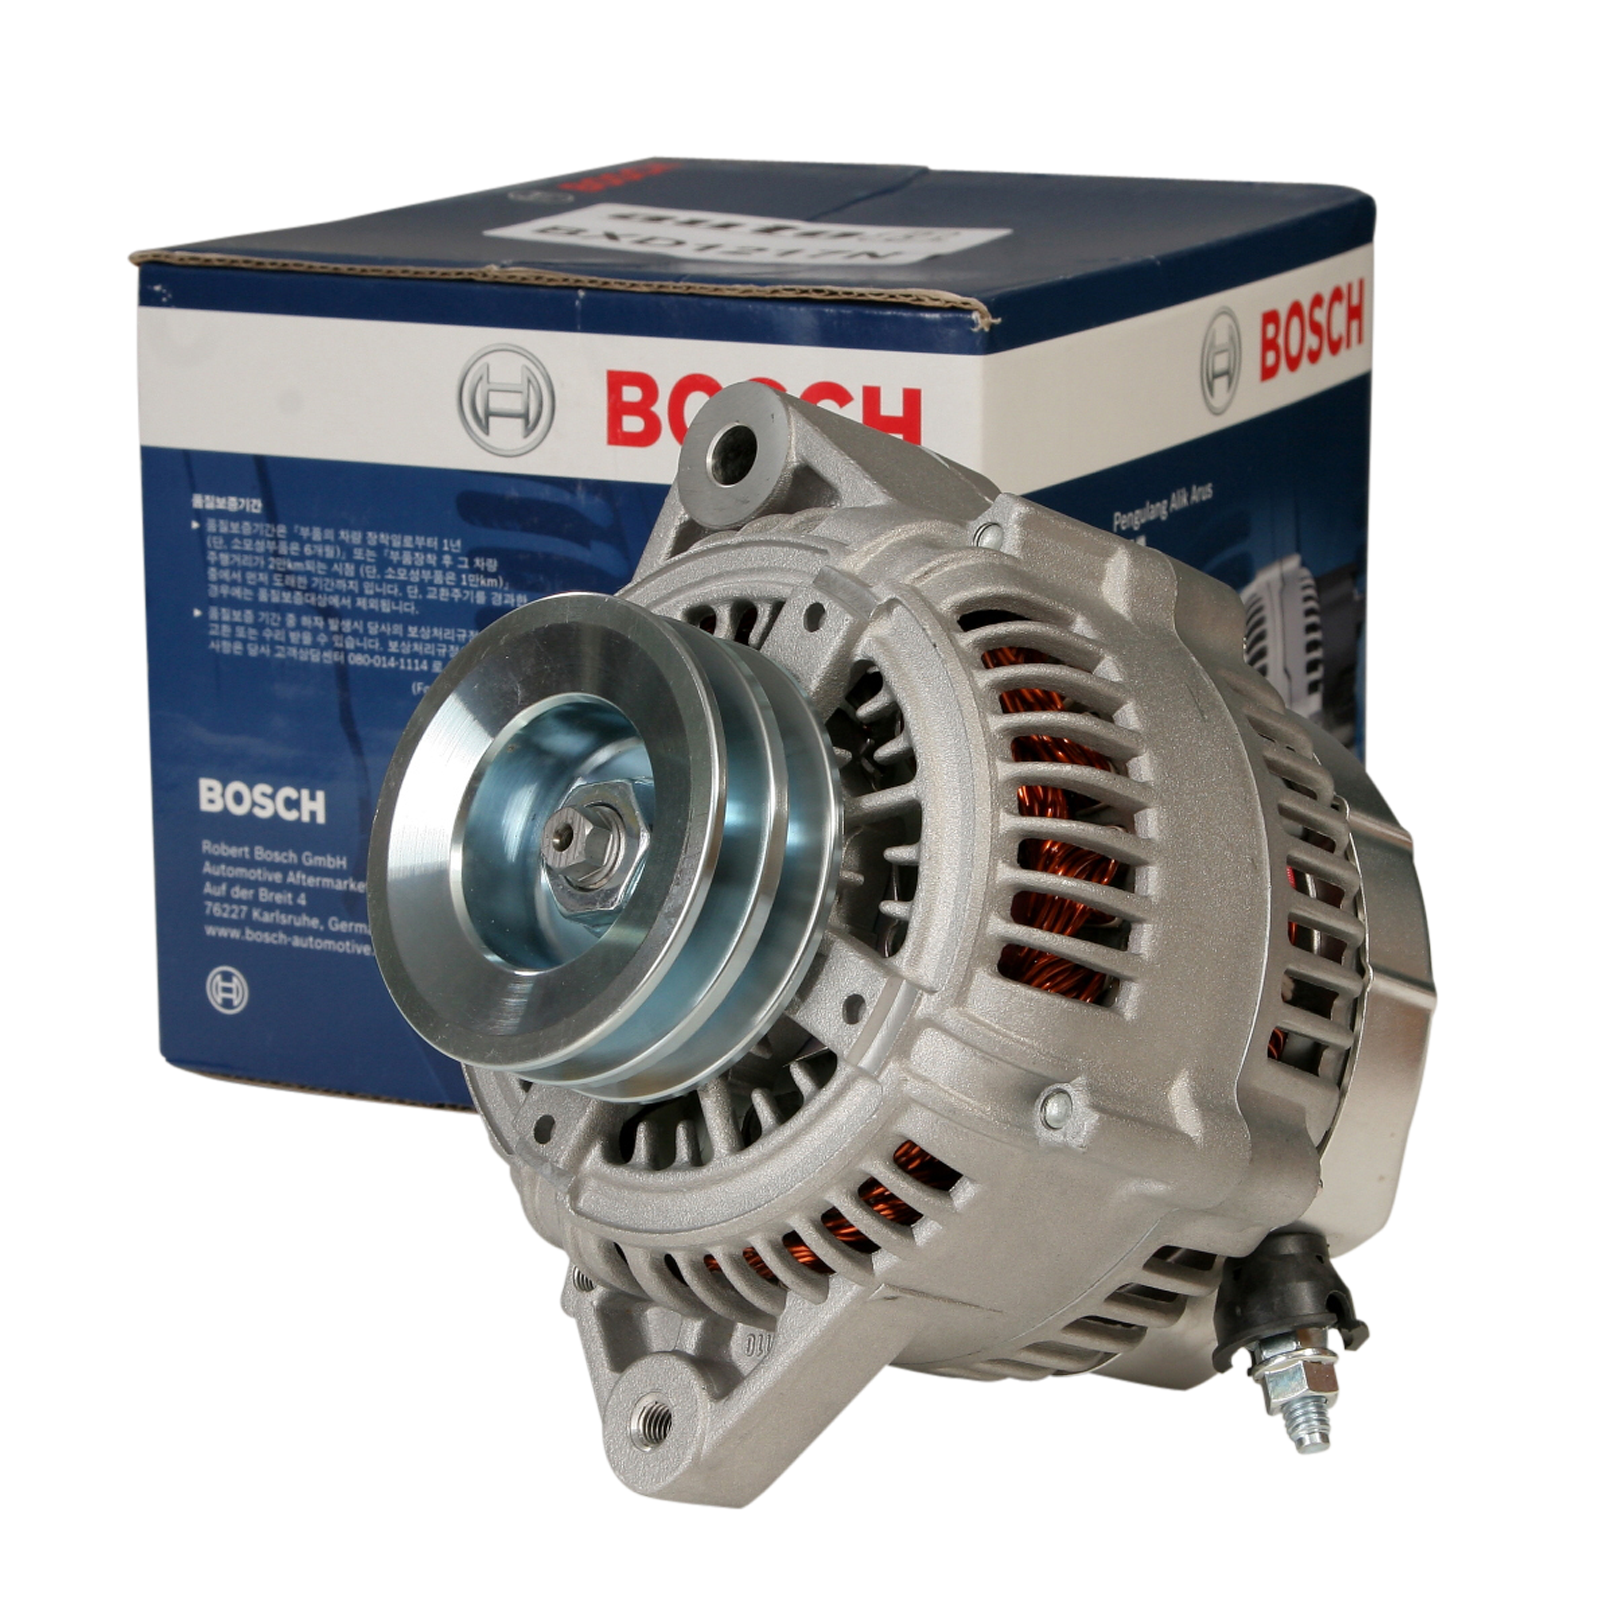 Genuine Bosch Alternator for Toyota Landcruiser 4.2L Diesel HZJ80 HZJ105 1HZ